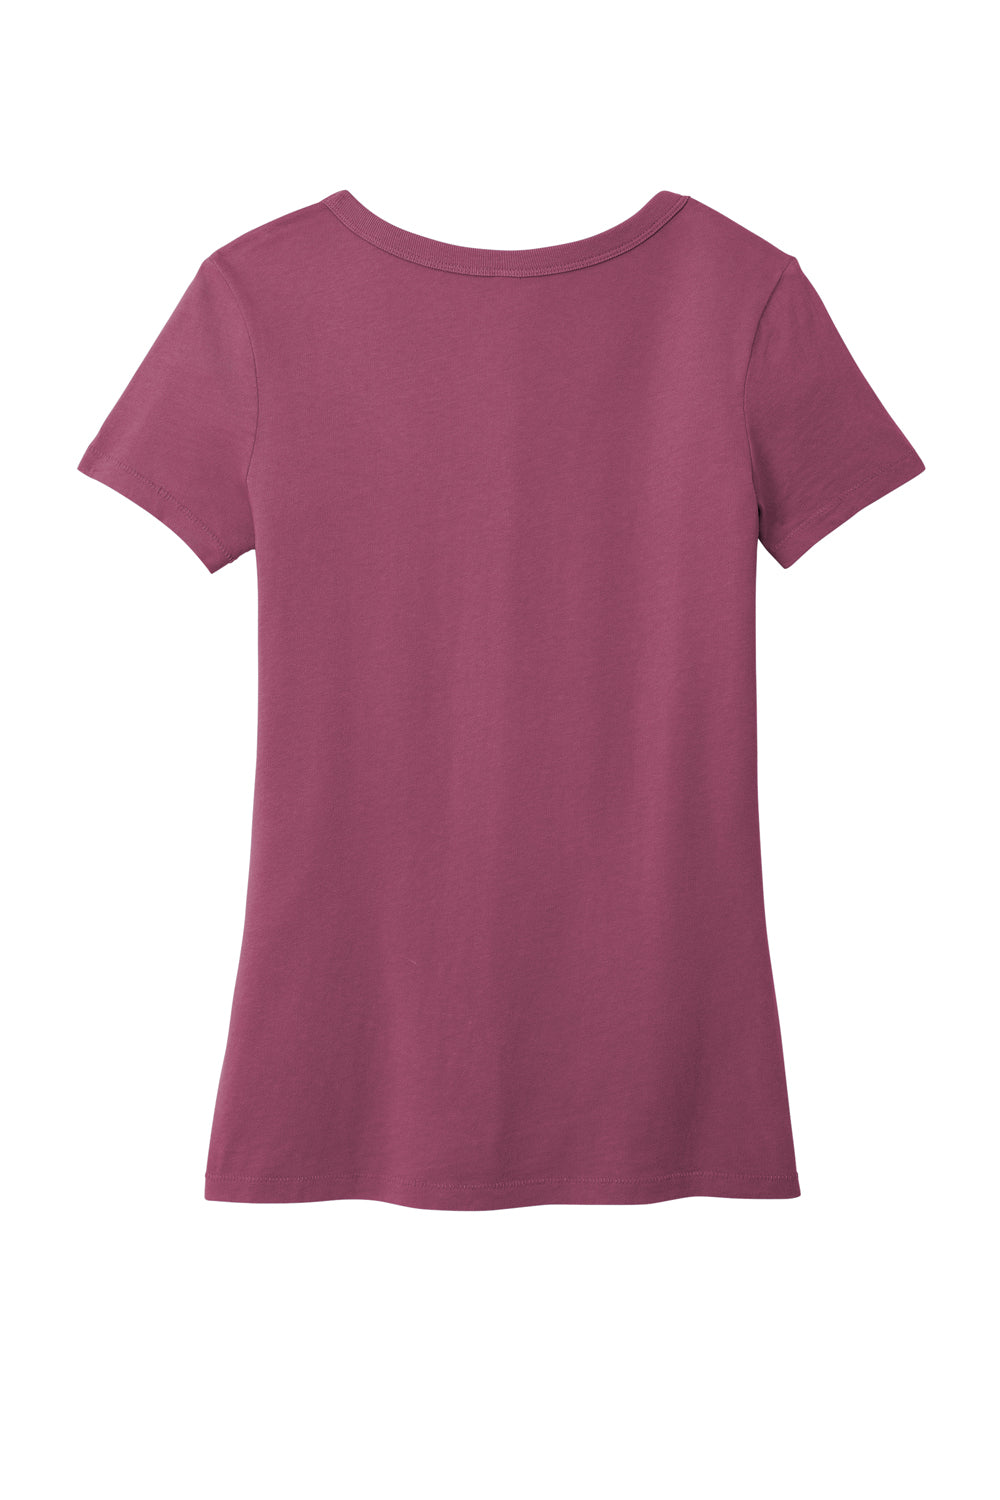 Port & Company LPC099V Womens Beach Wash Garment Dyed Short Sleeve V-Neck T-Shirt Vintage Raspberry Flat Back